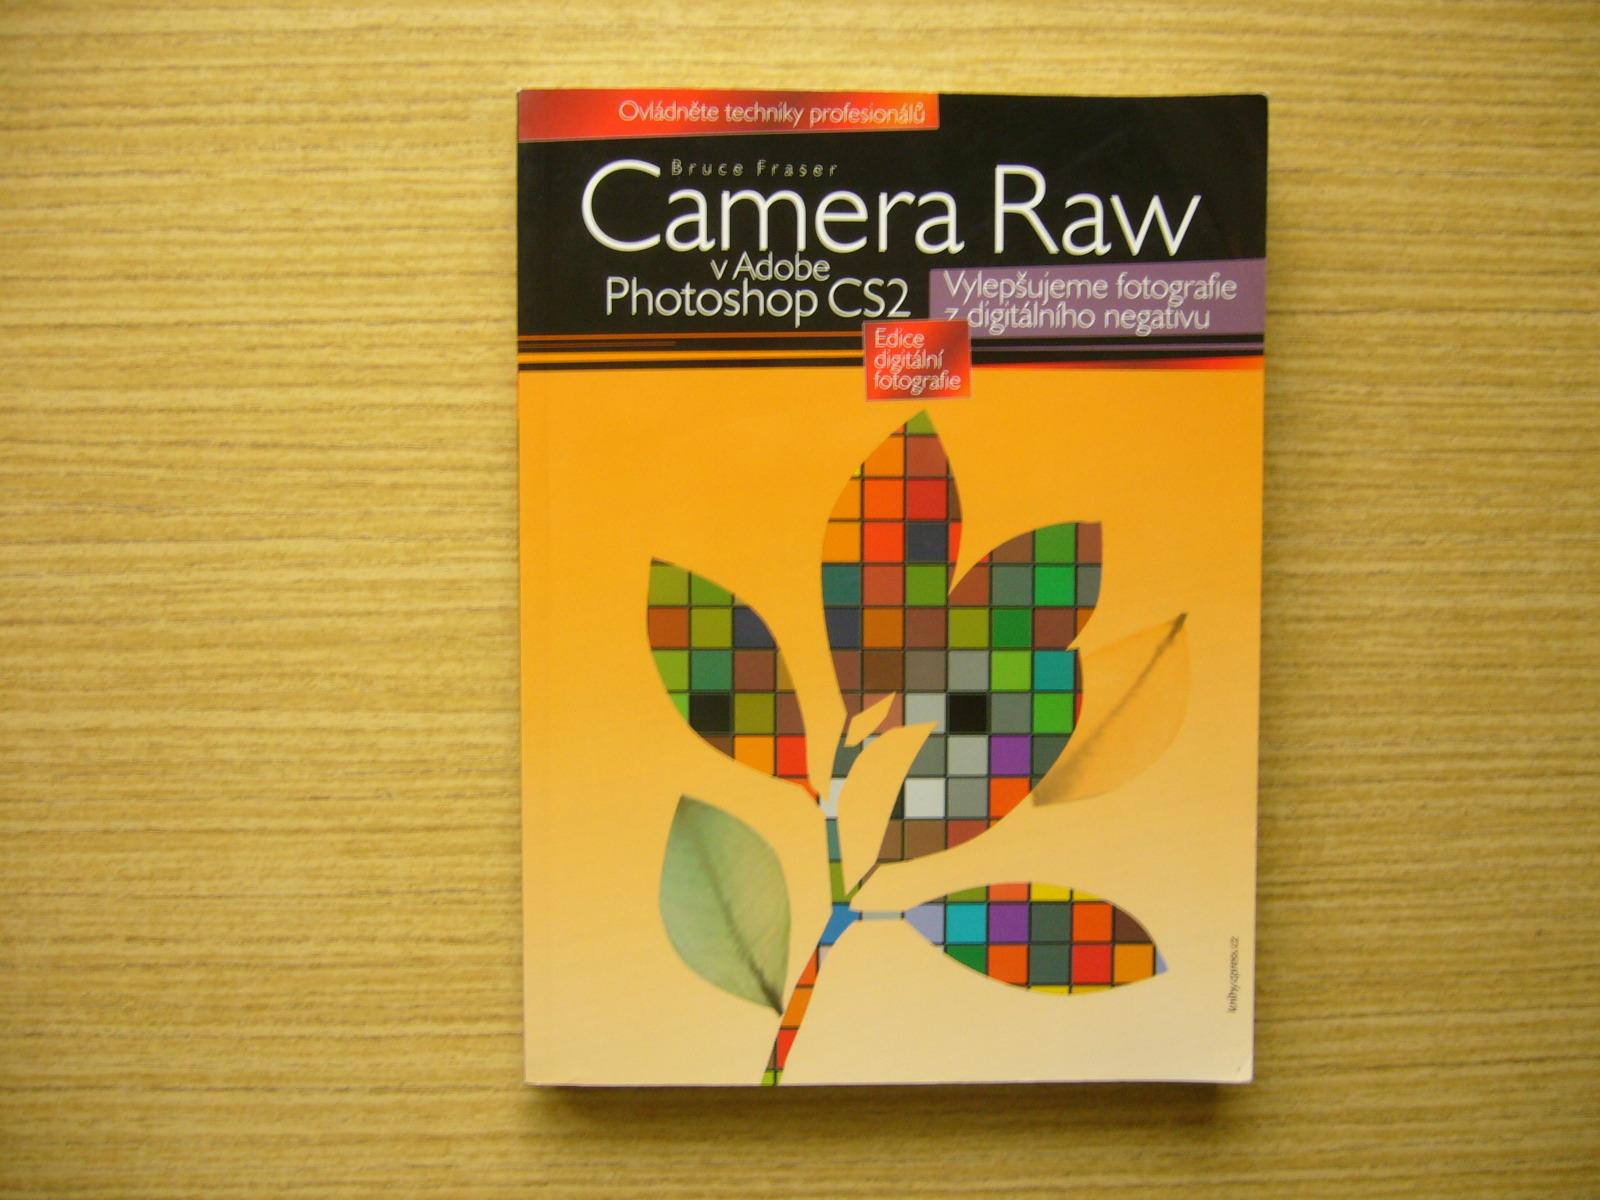 Bruce Fraser - Camera Raw v Adobe Photoshop CS2 | 2006 -n - Knihy